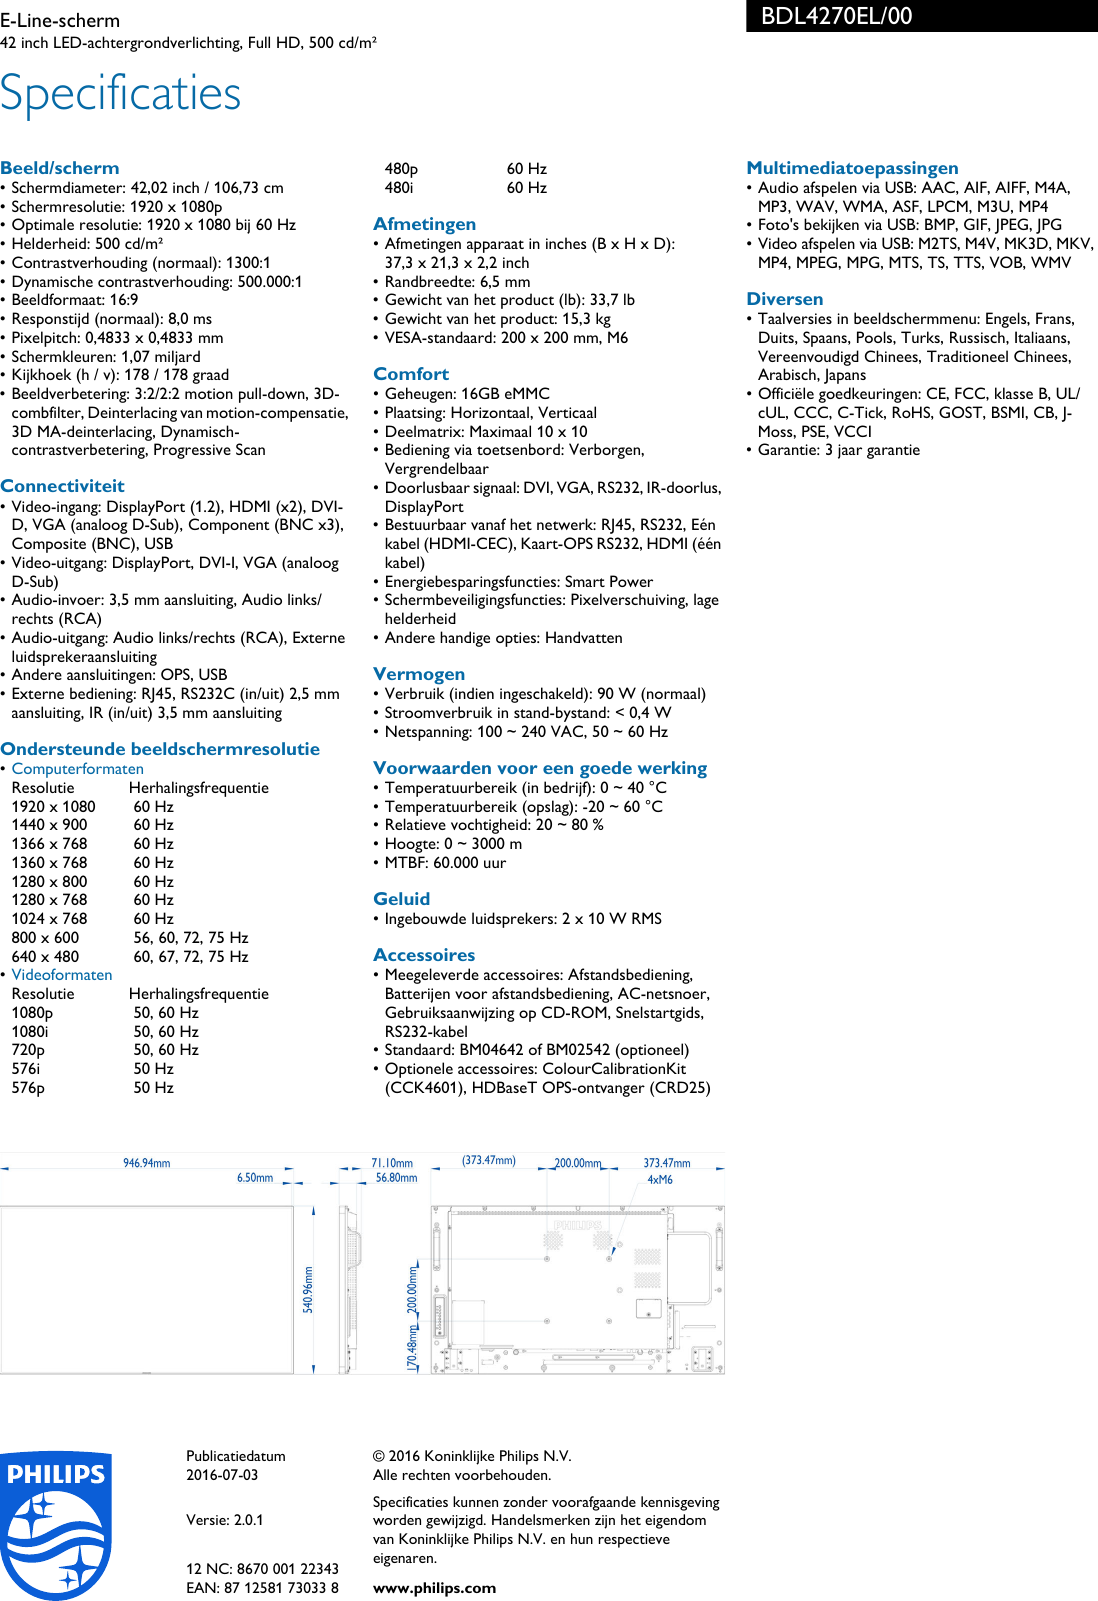 Page 3 of 3 - Philips BDL4270EL/00 E-Line-scherm User Manual Brochure Bdl4270el 00 Pss Nldnl